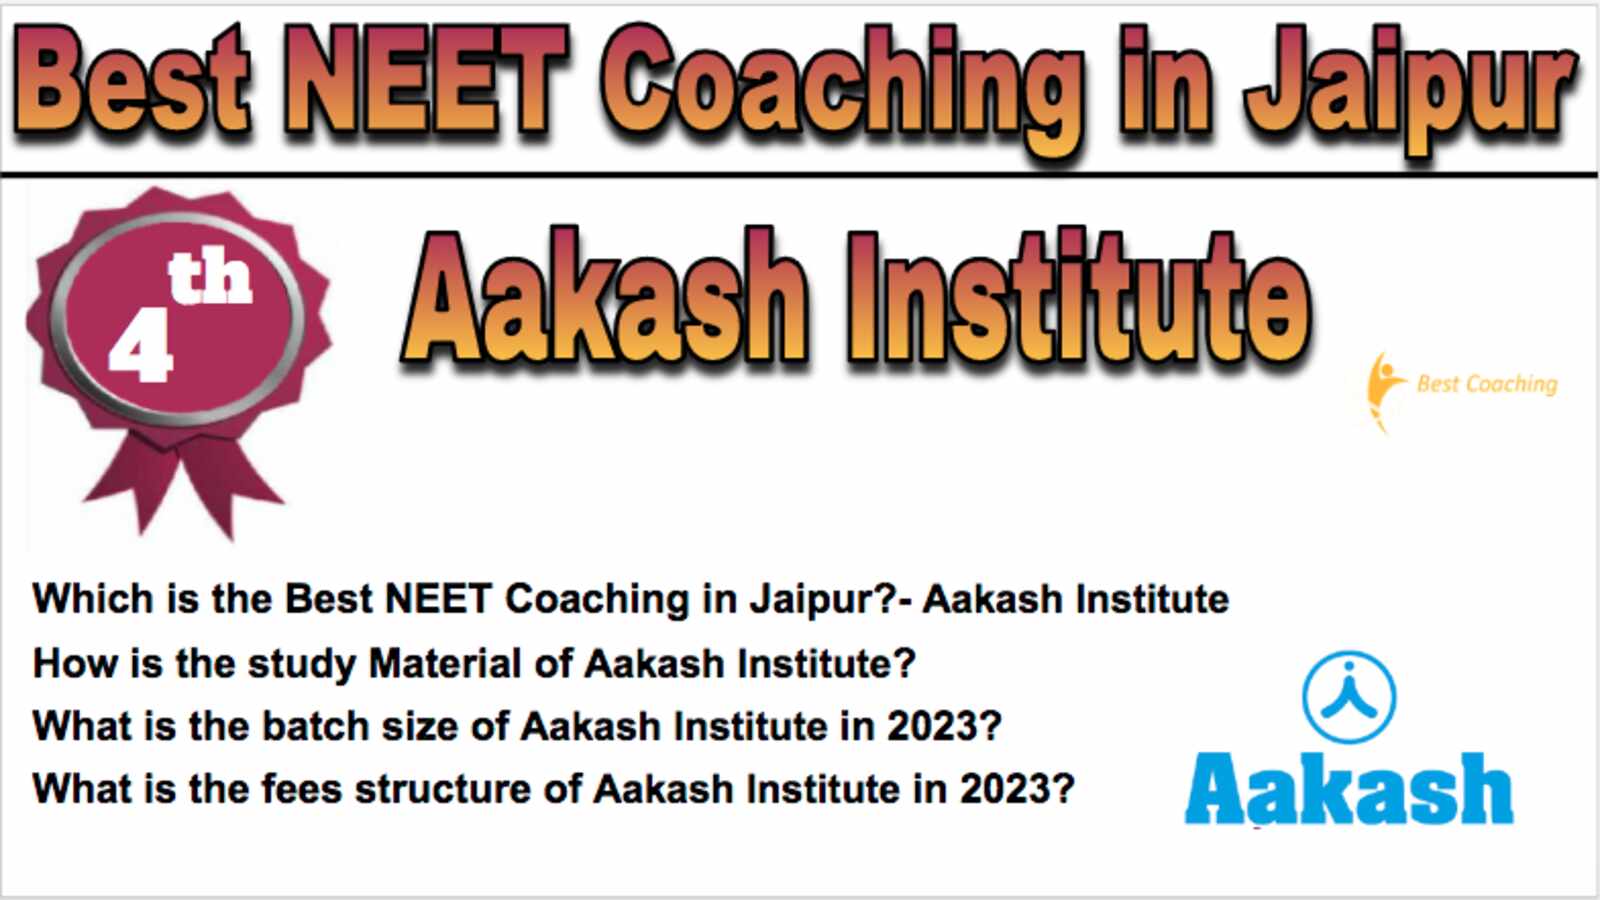 Rank 4 Best NEET Coaching in Jaipur